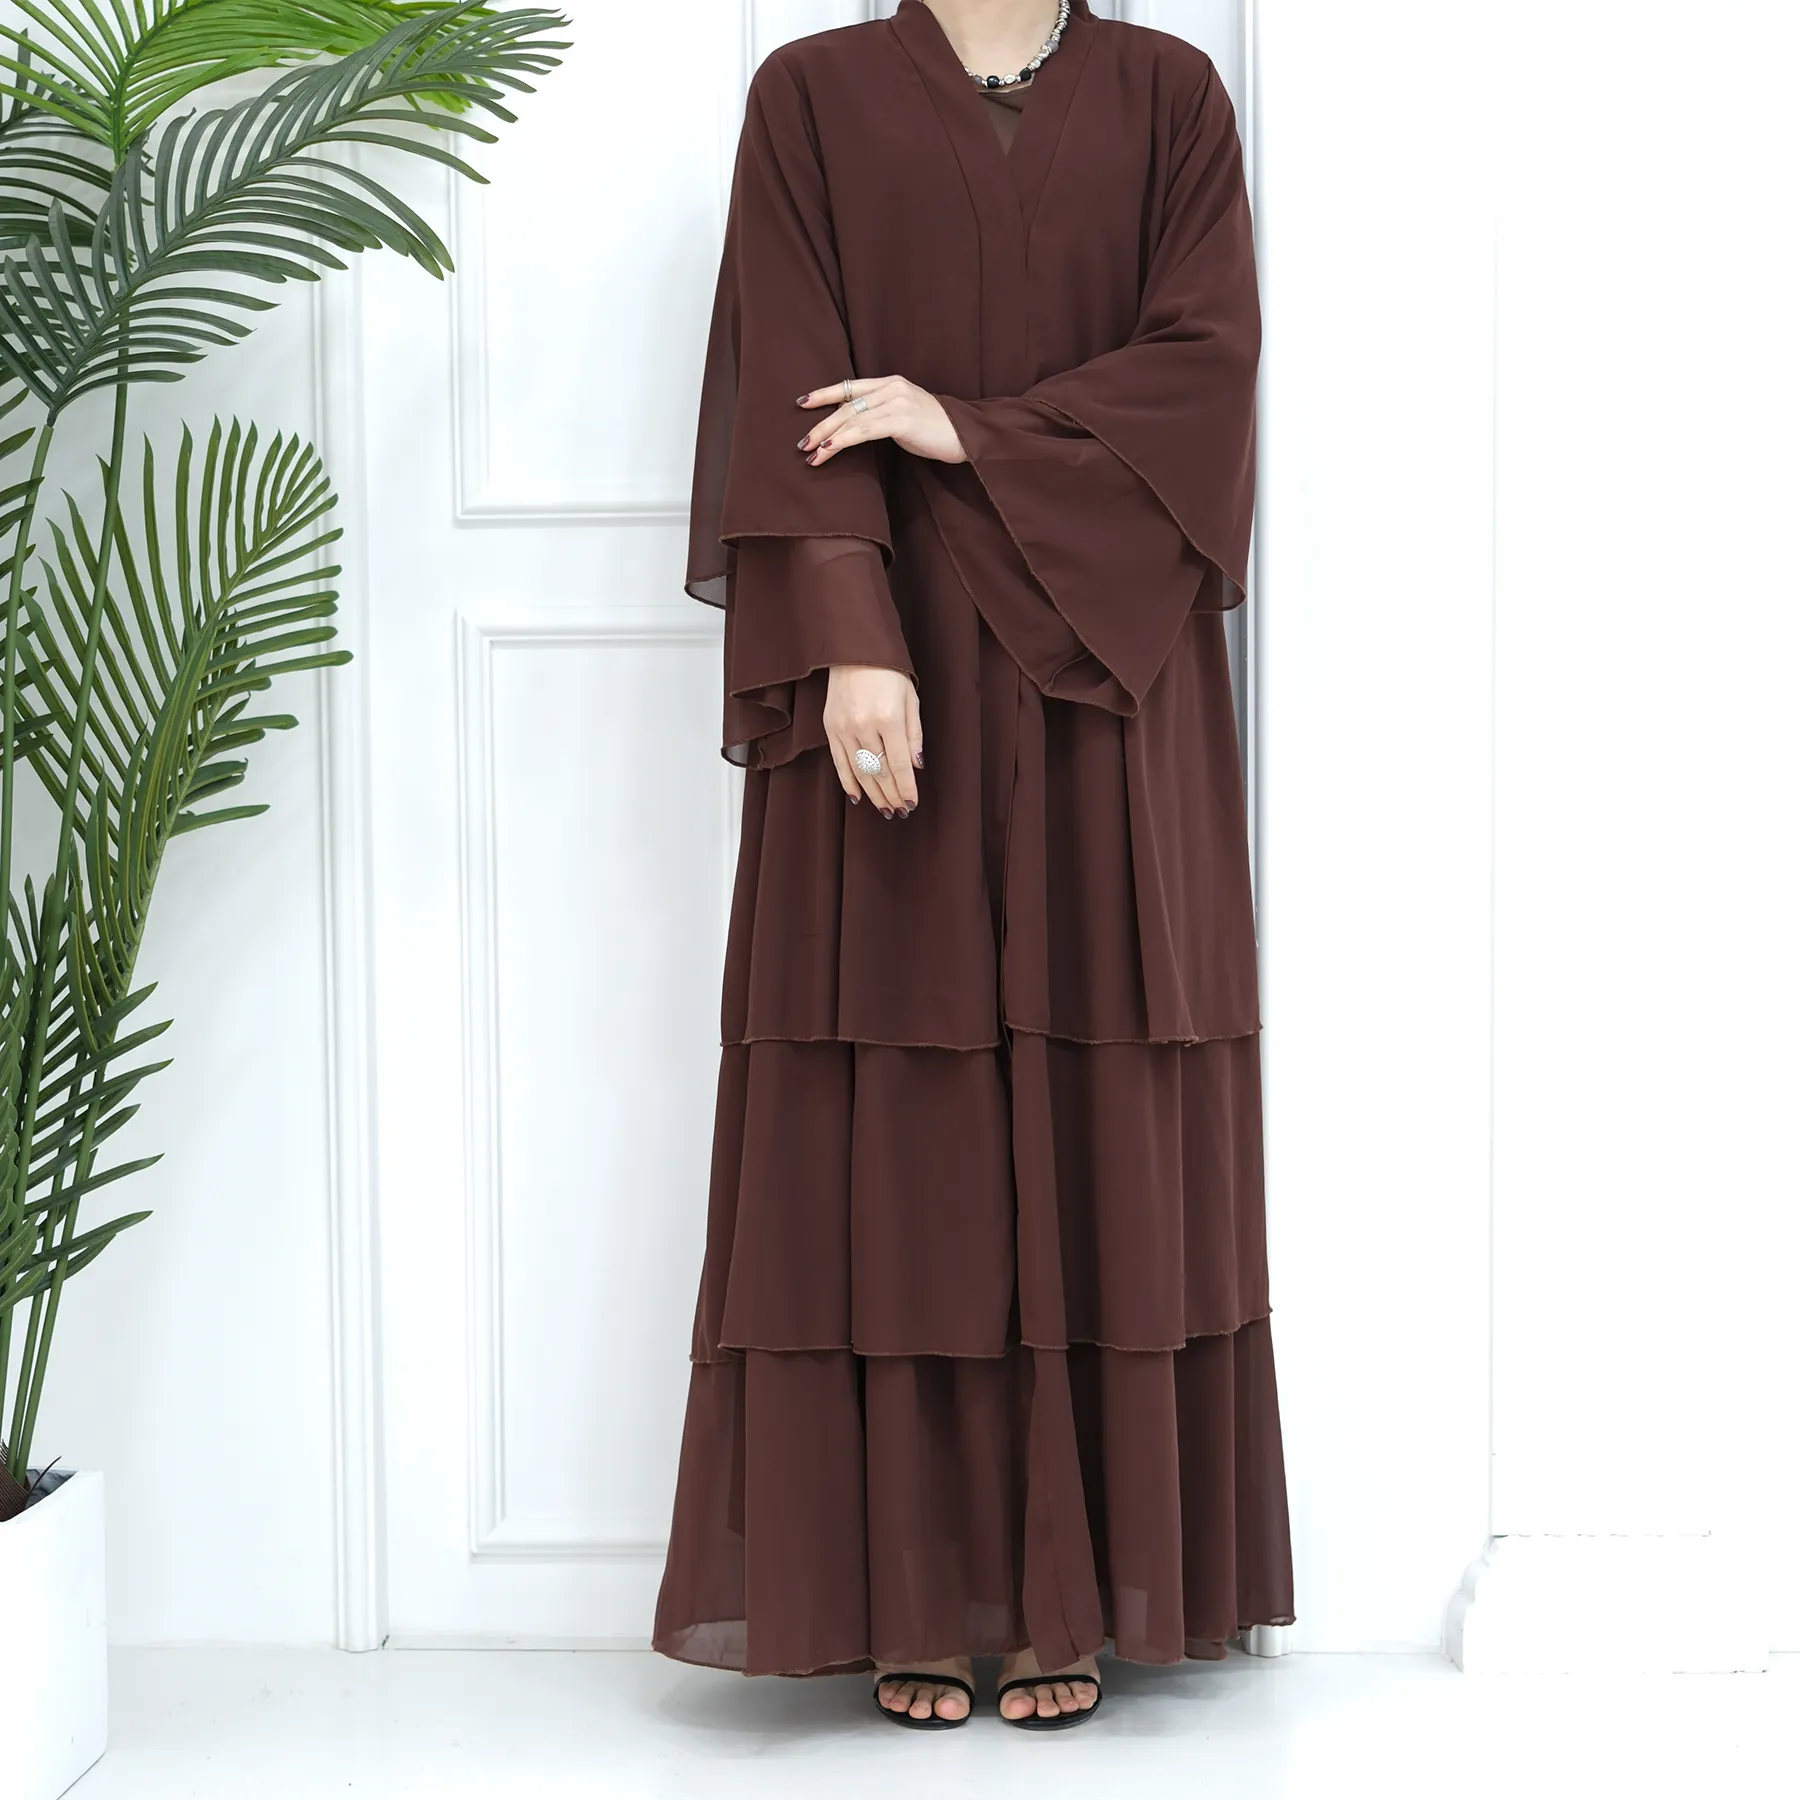 3 Layers Chiffon Solid Color Open Abaya Dubai Turkey Elegant Kimono Muslim Dresses for Women Islamic Clothing